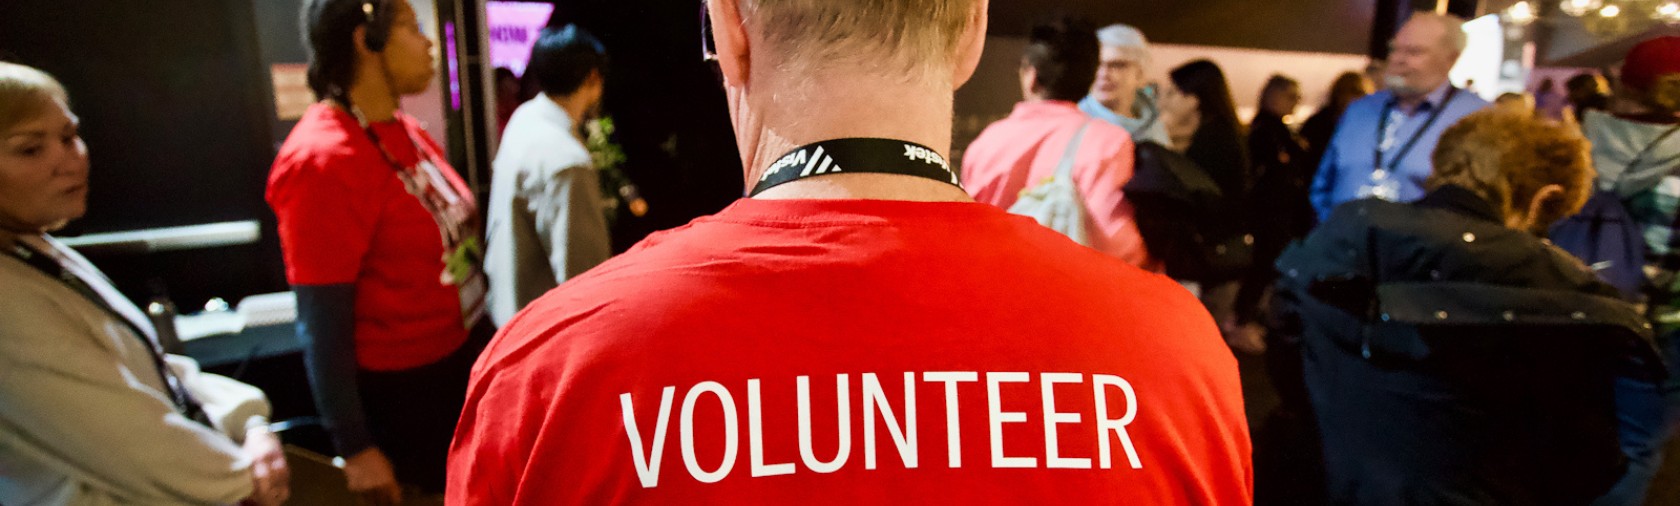 Back of a volunteer t-shirt